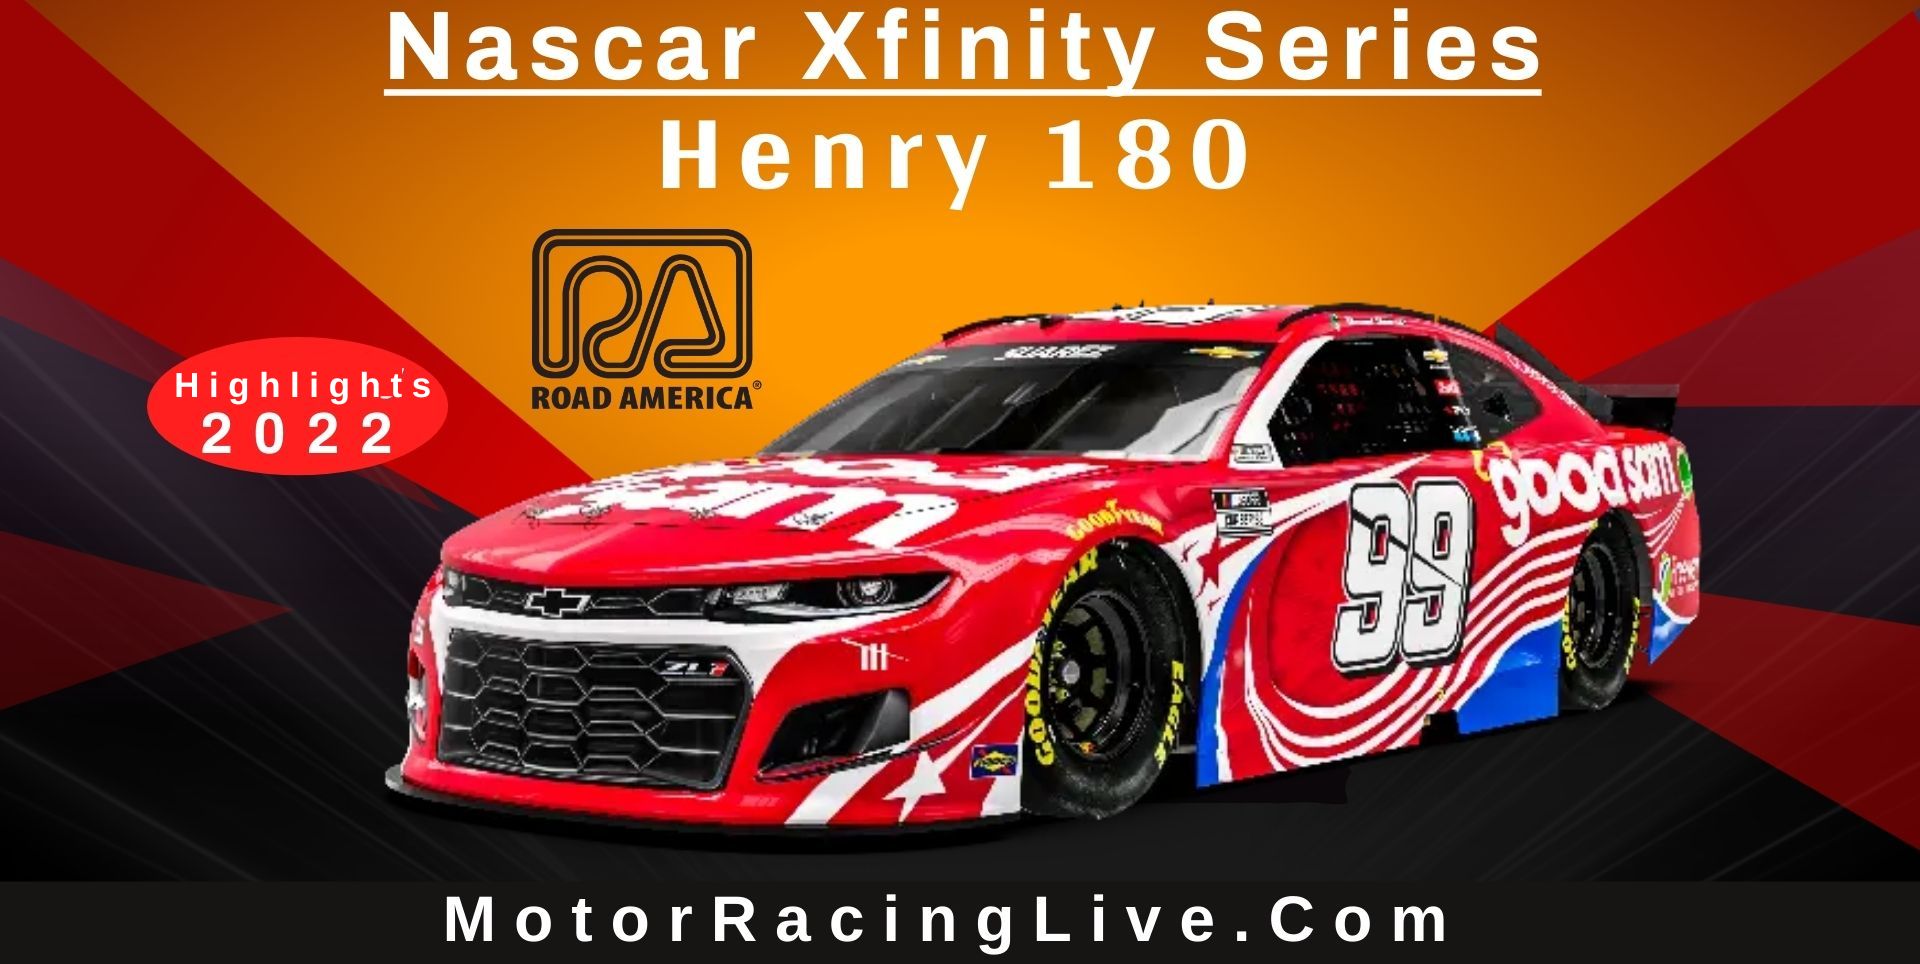 Henry 180 Highlights 2022 NASCAR Xfinity Series